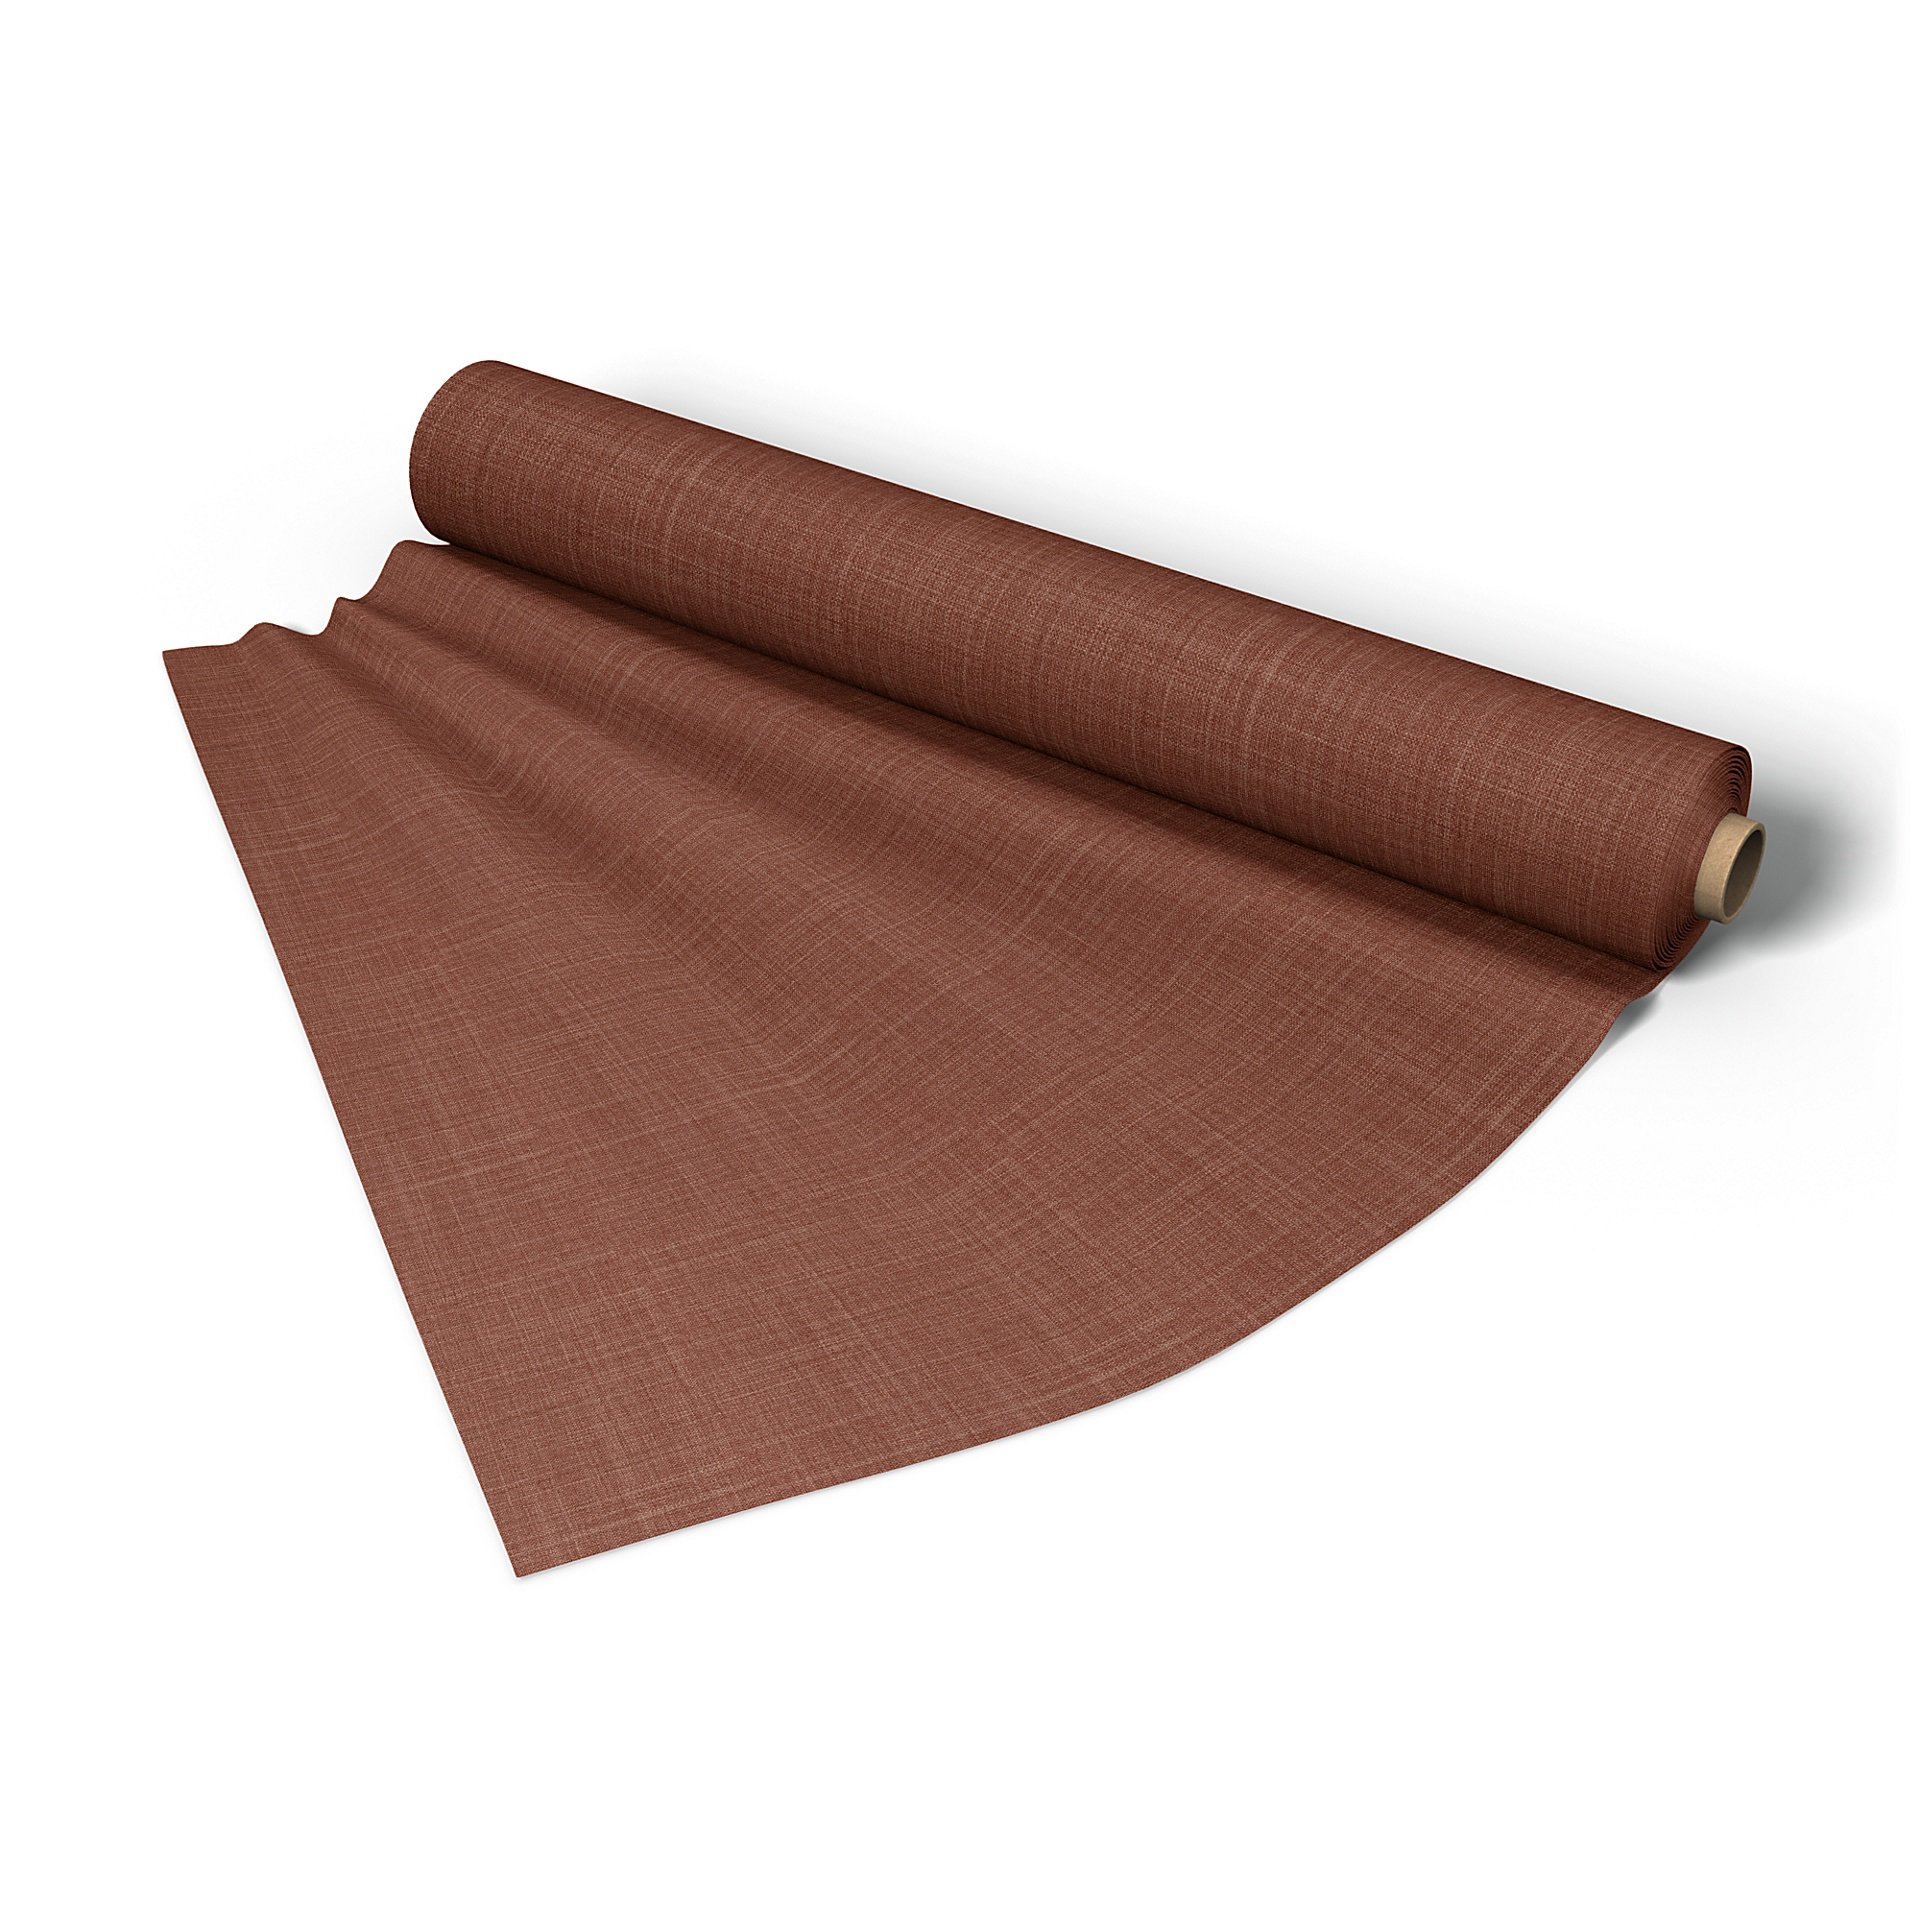 Fabric per metre, Rust, Boucle & Texture - Bemz